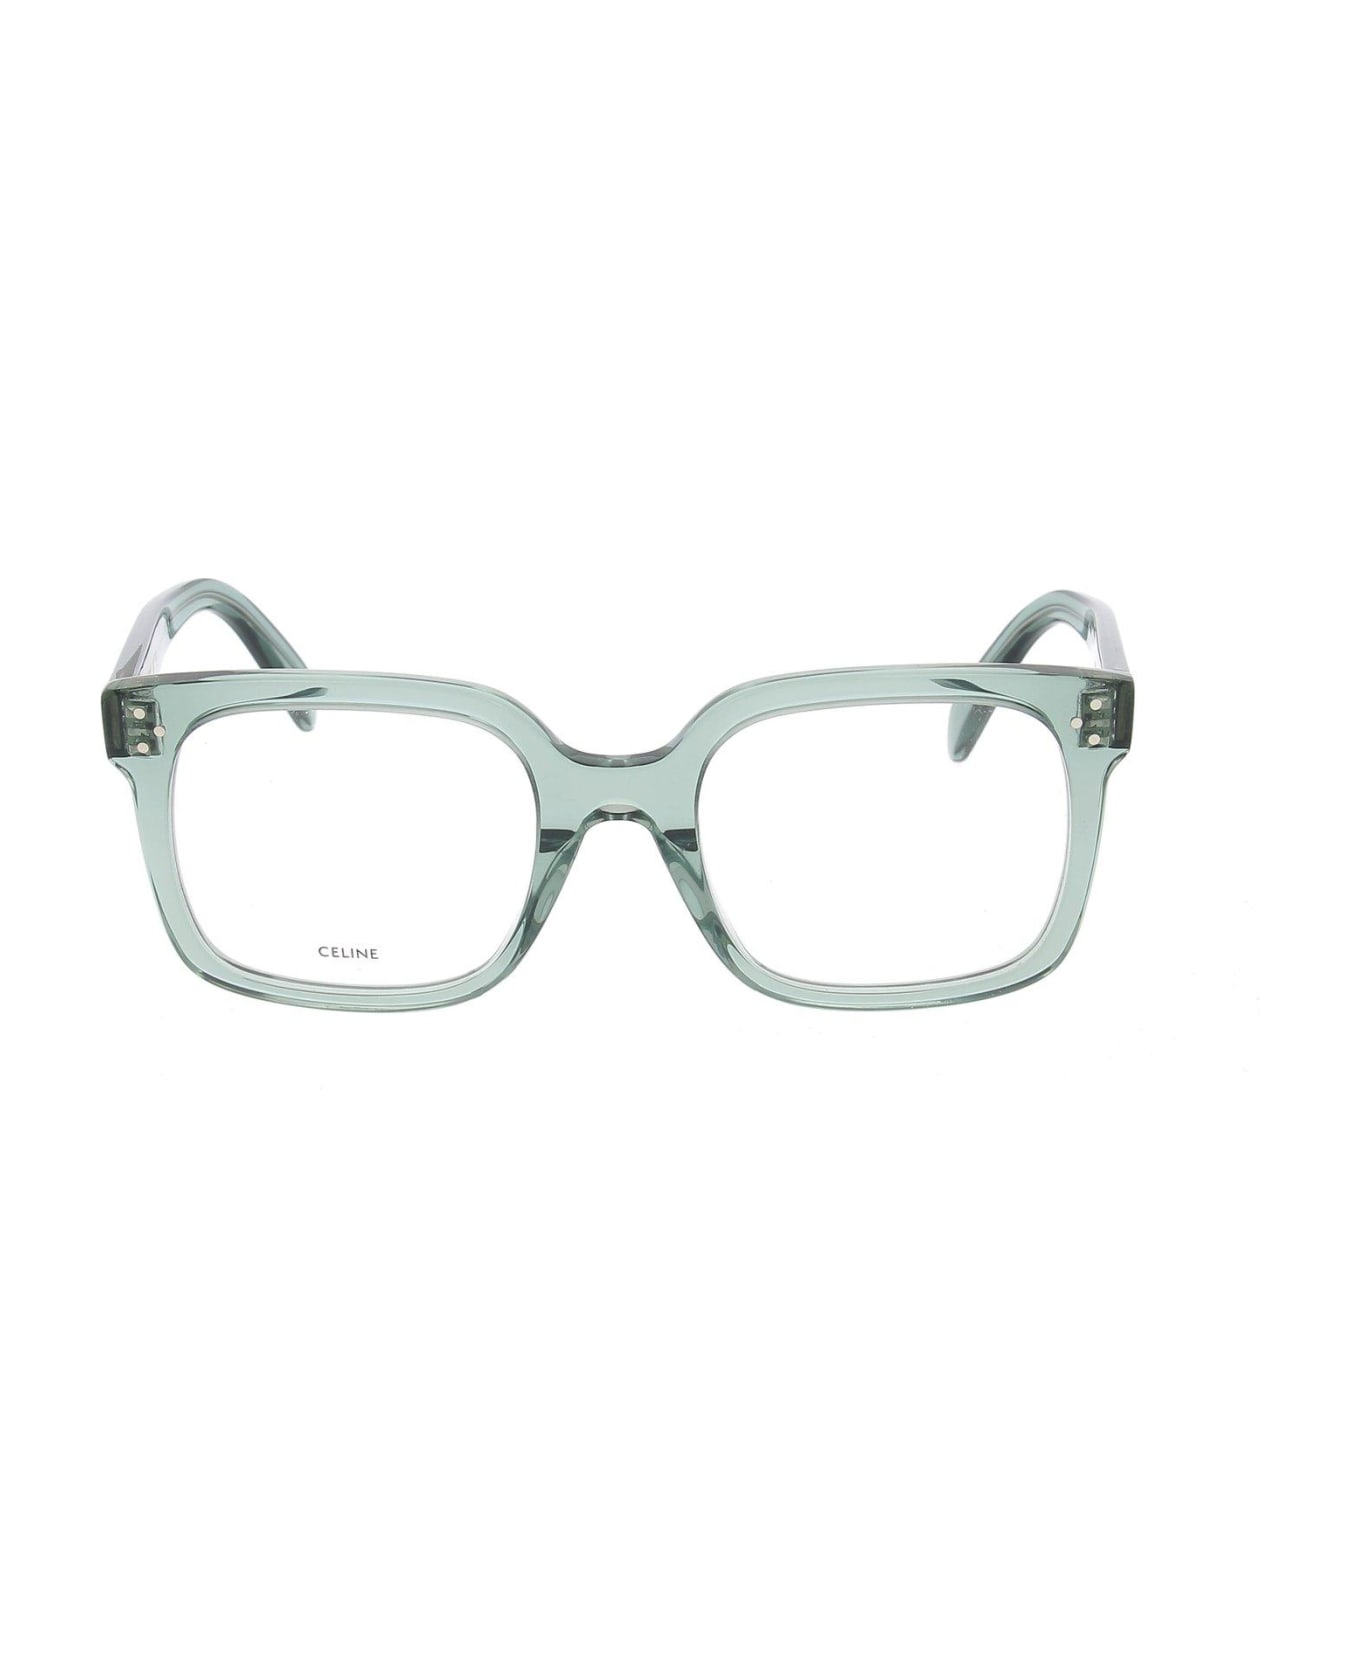 Celine Square Frame Glasses - 093